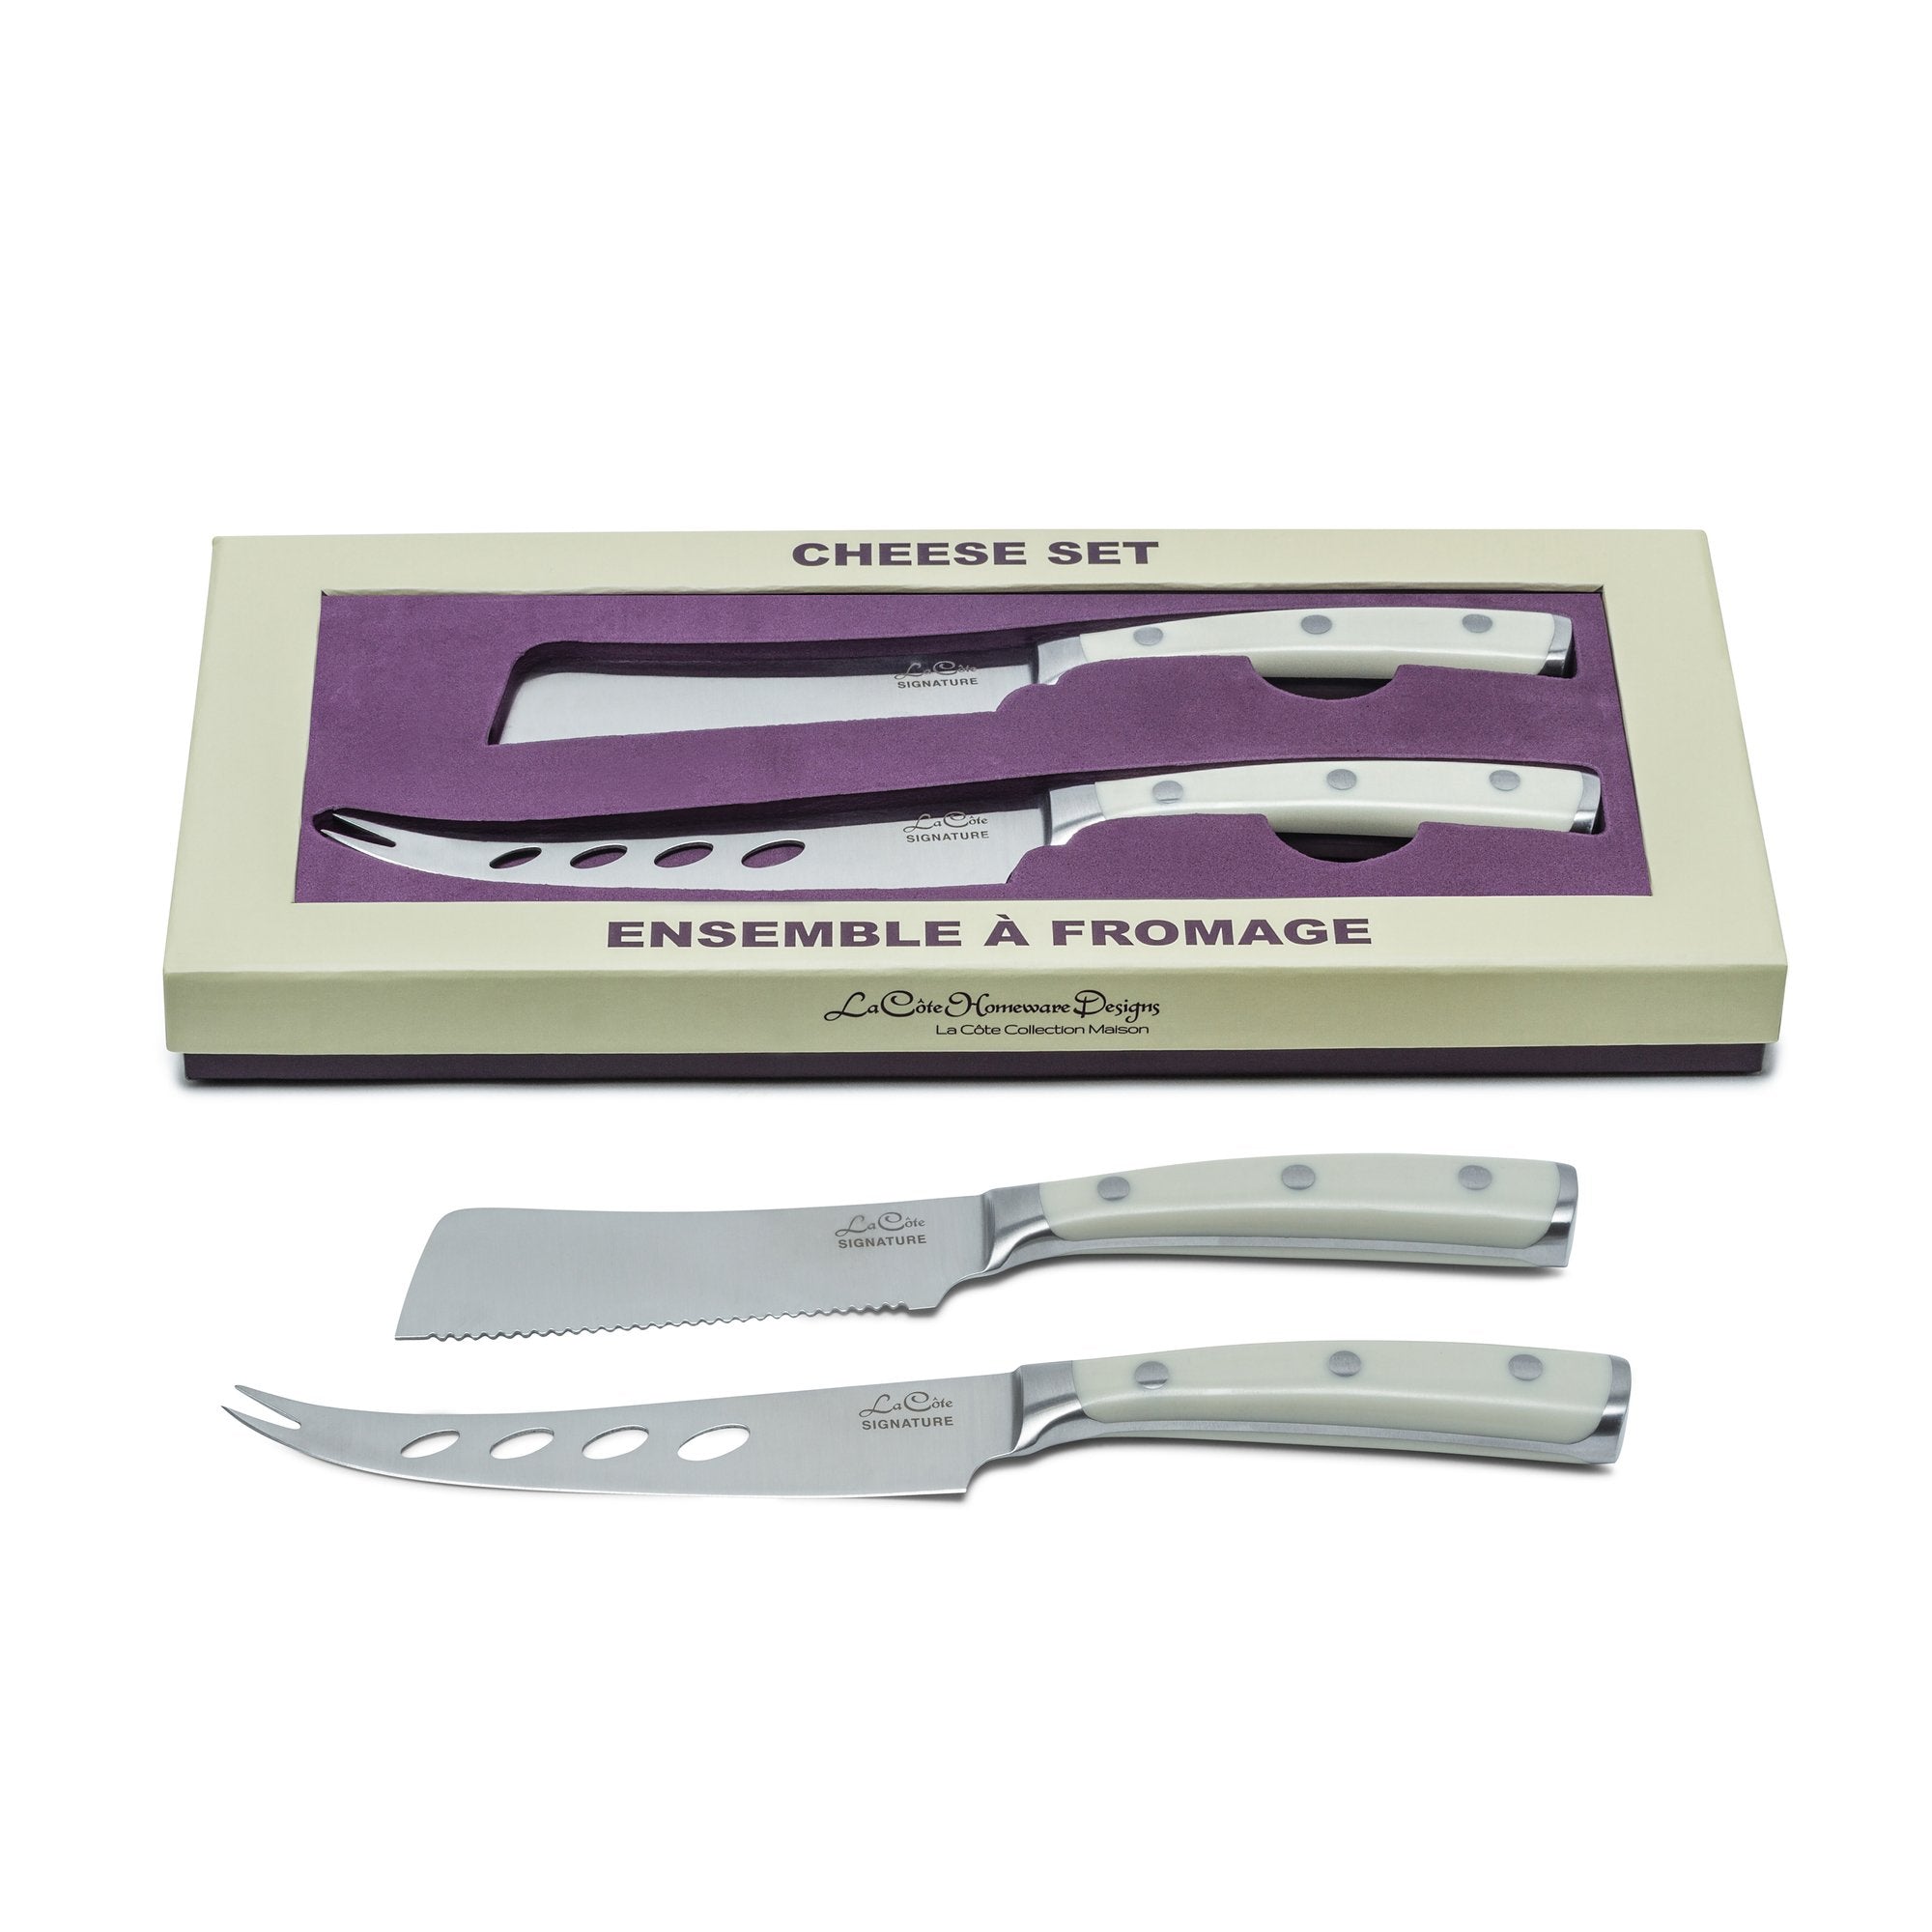 La Cote Signature Series Knife Set High Carbon German Steel ABS Handle (Cheese & Bread Knife Set)